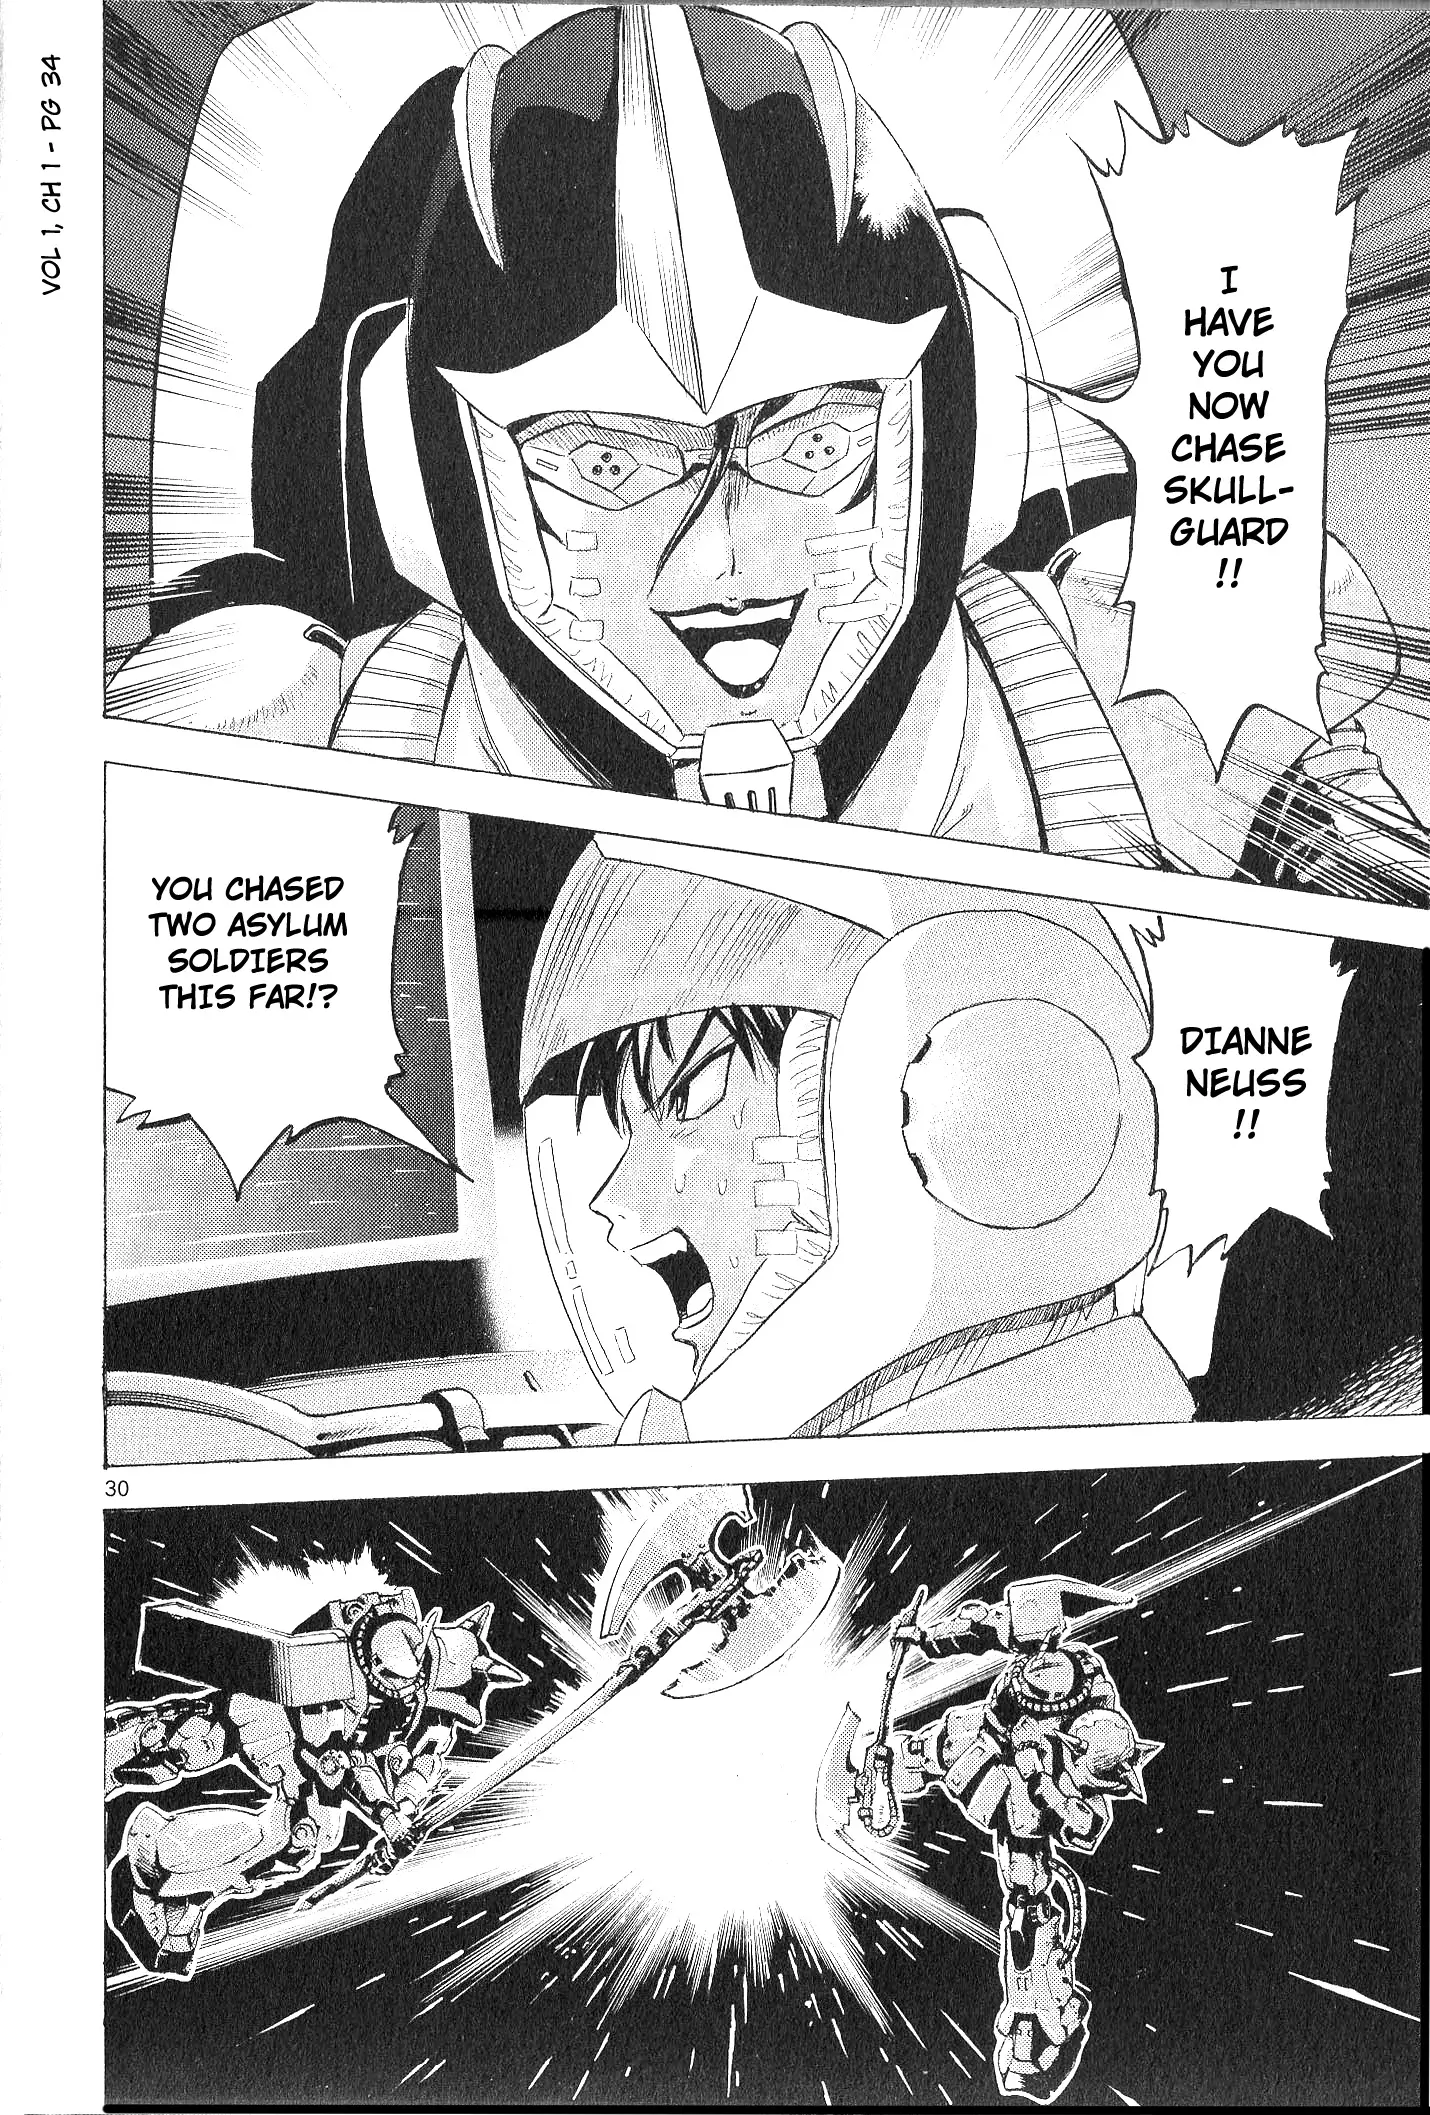 Mobile Suit Gundam Aggressor - 1 page 30-1b2835f1